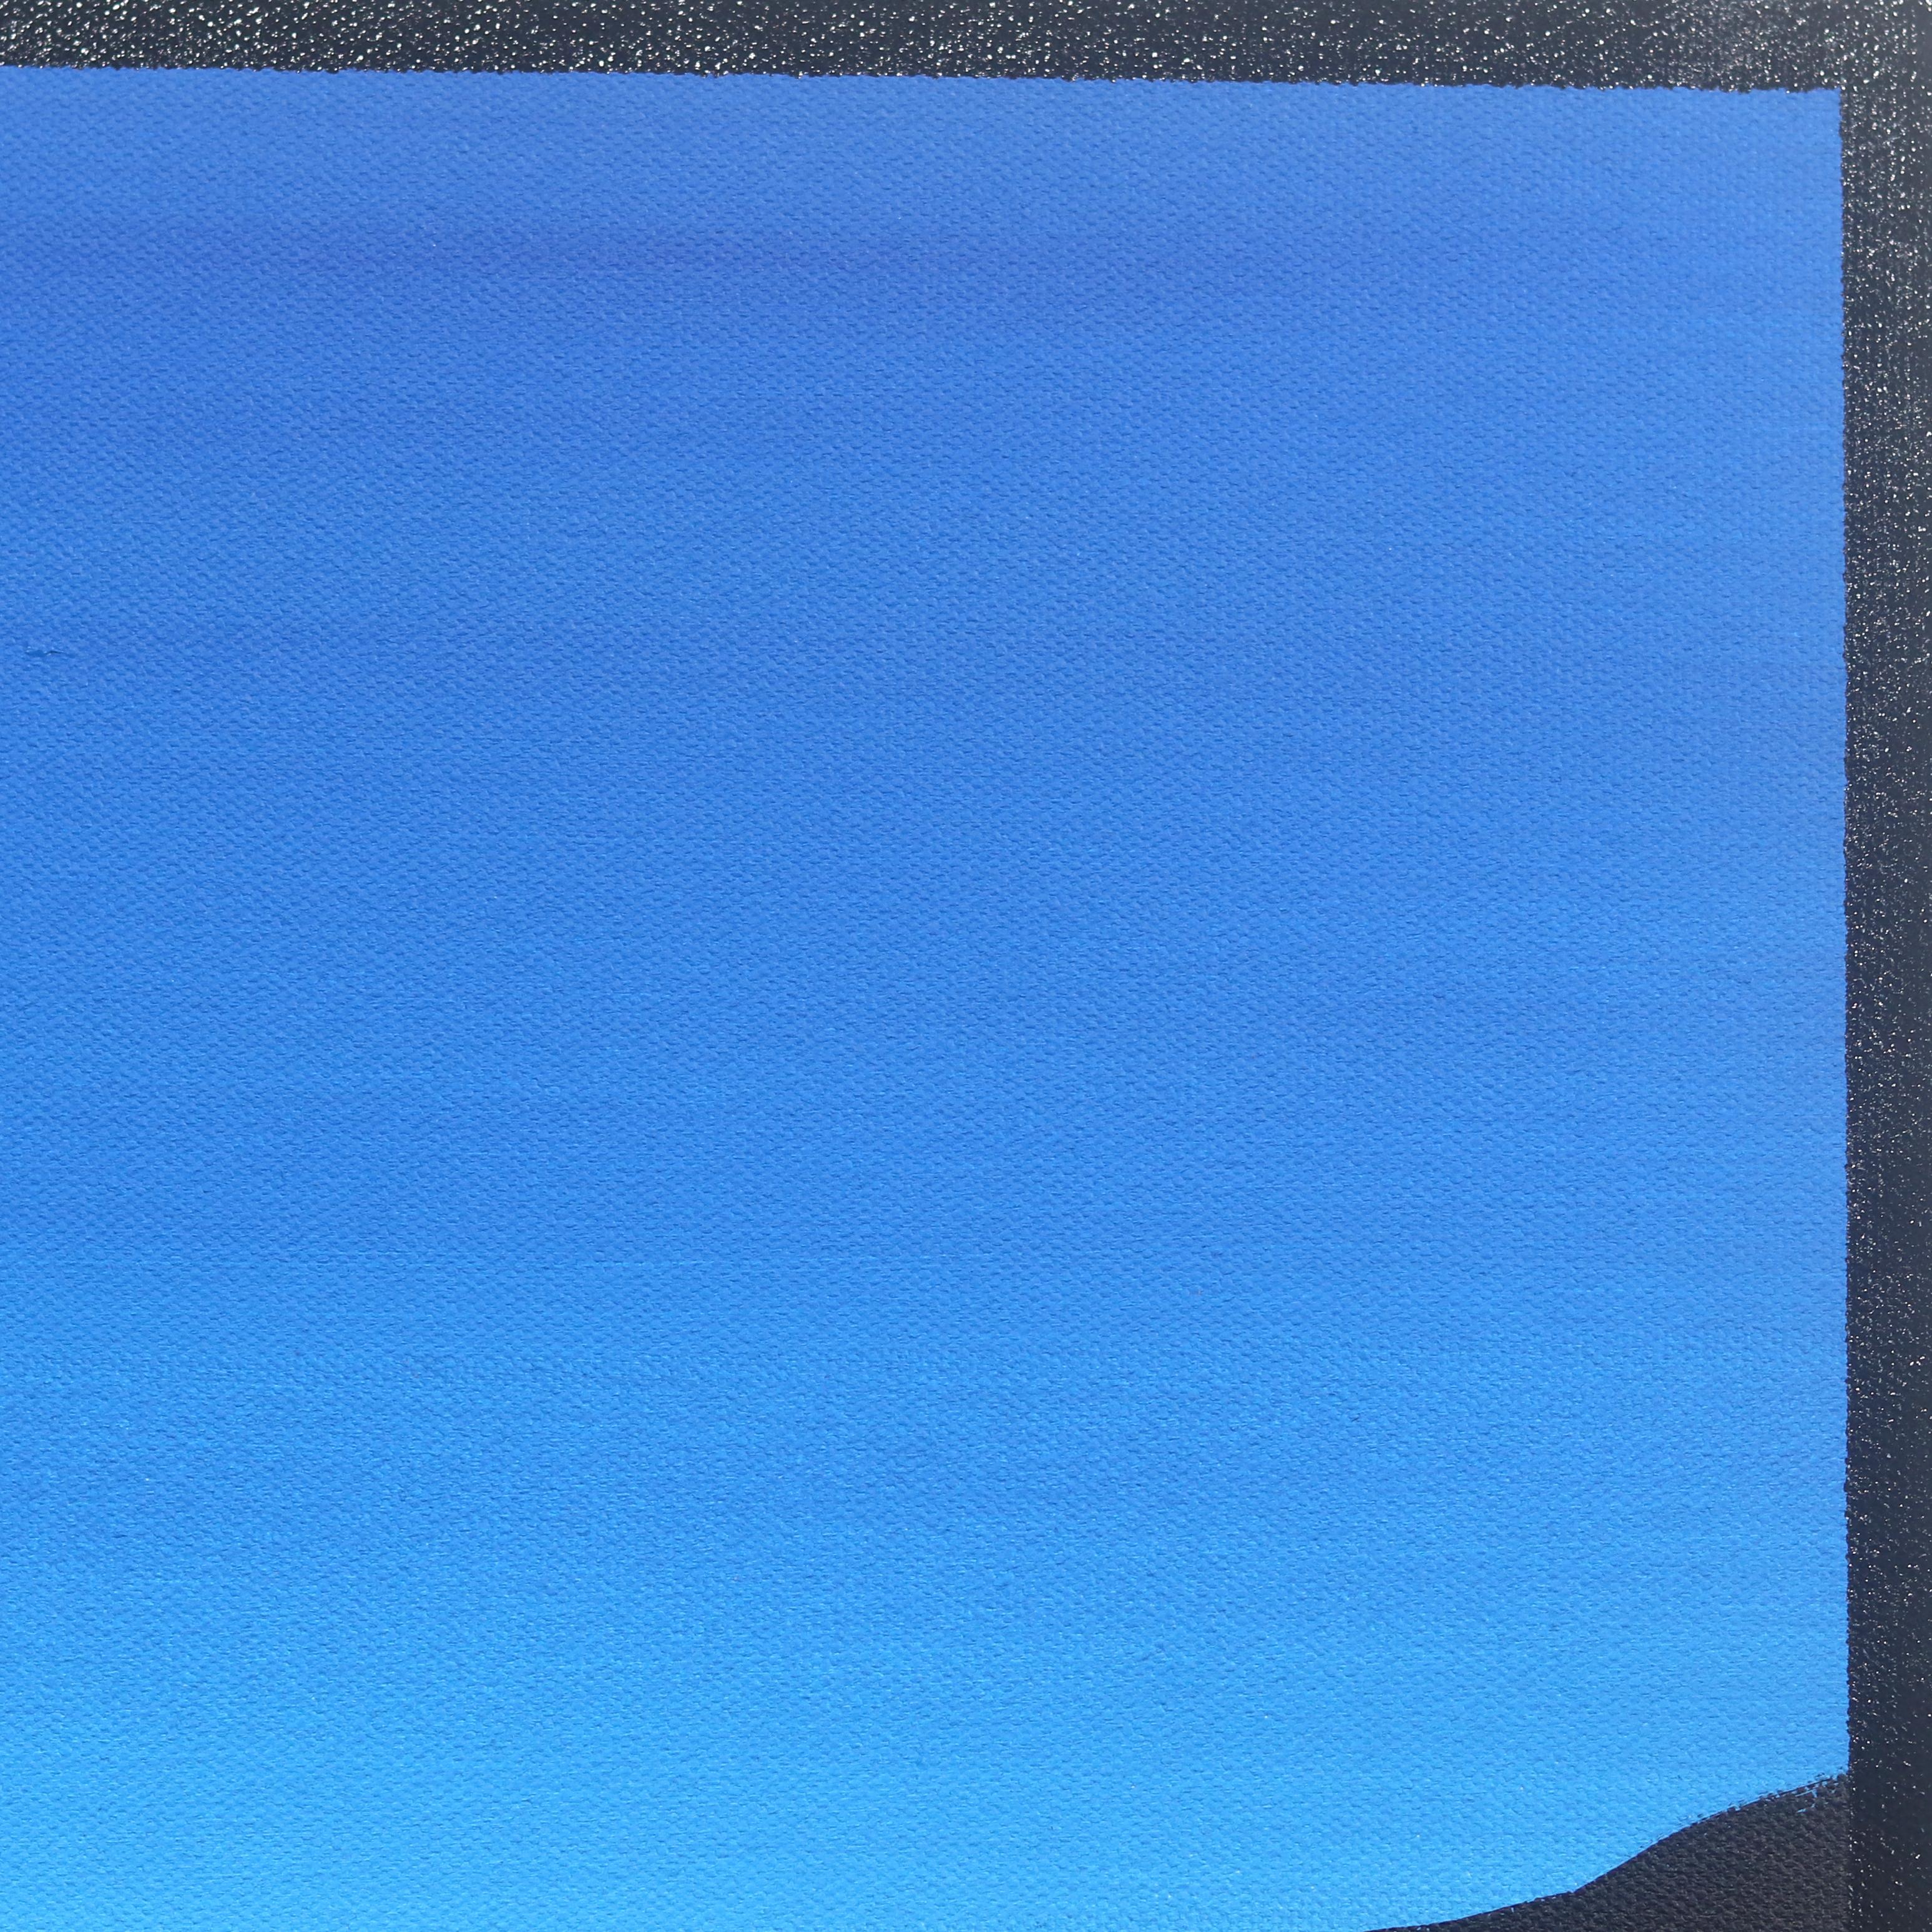 Fairfax Sunset Aerial - Contemporary Painting by Pete Kasprzak